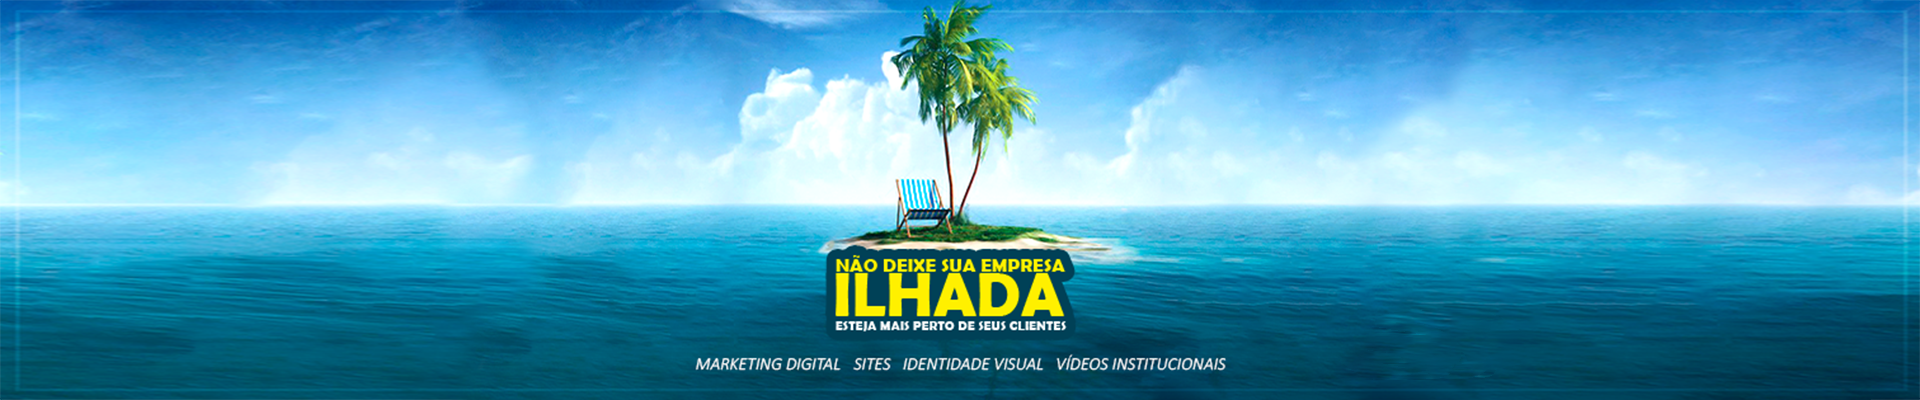 Mundo Lemon - Agência Digital